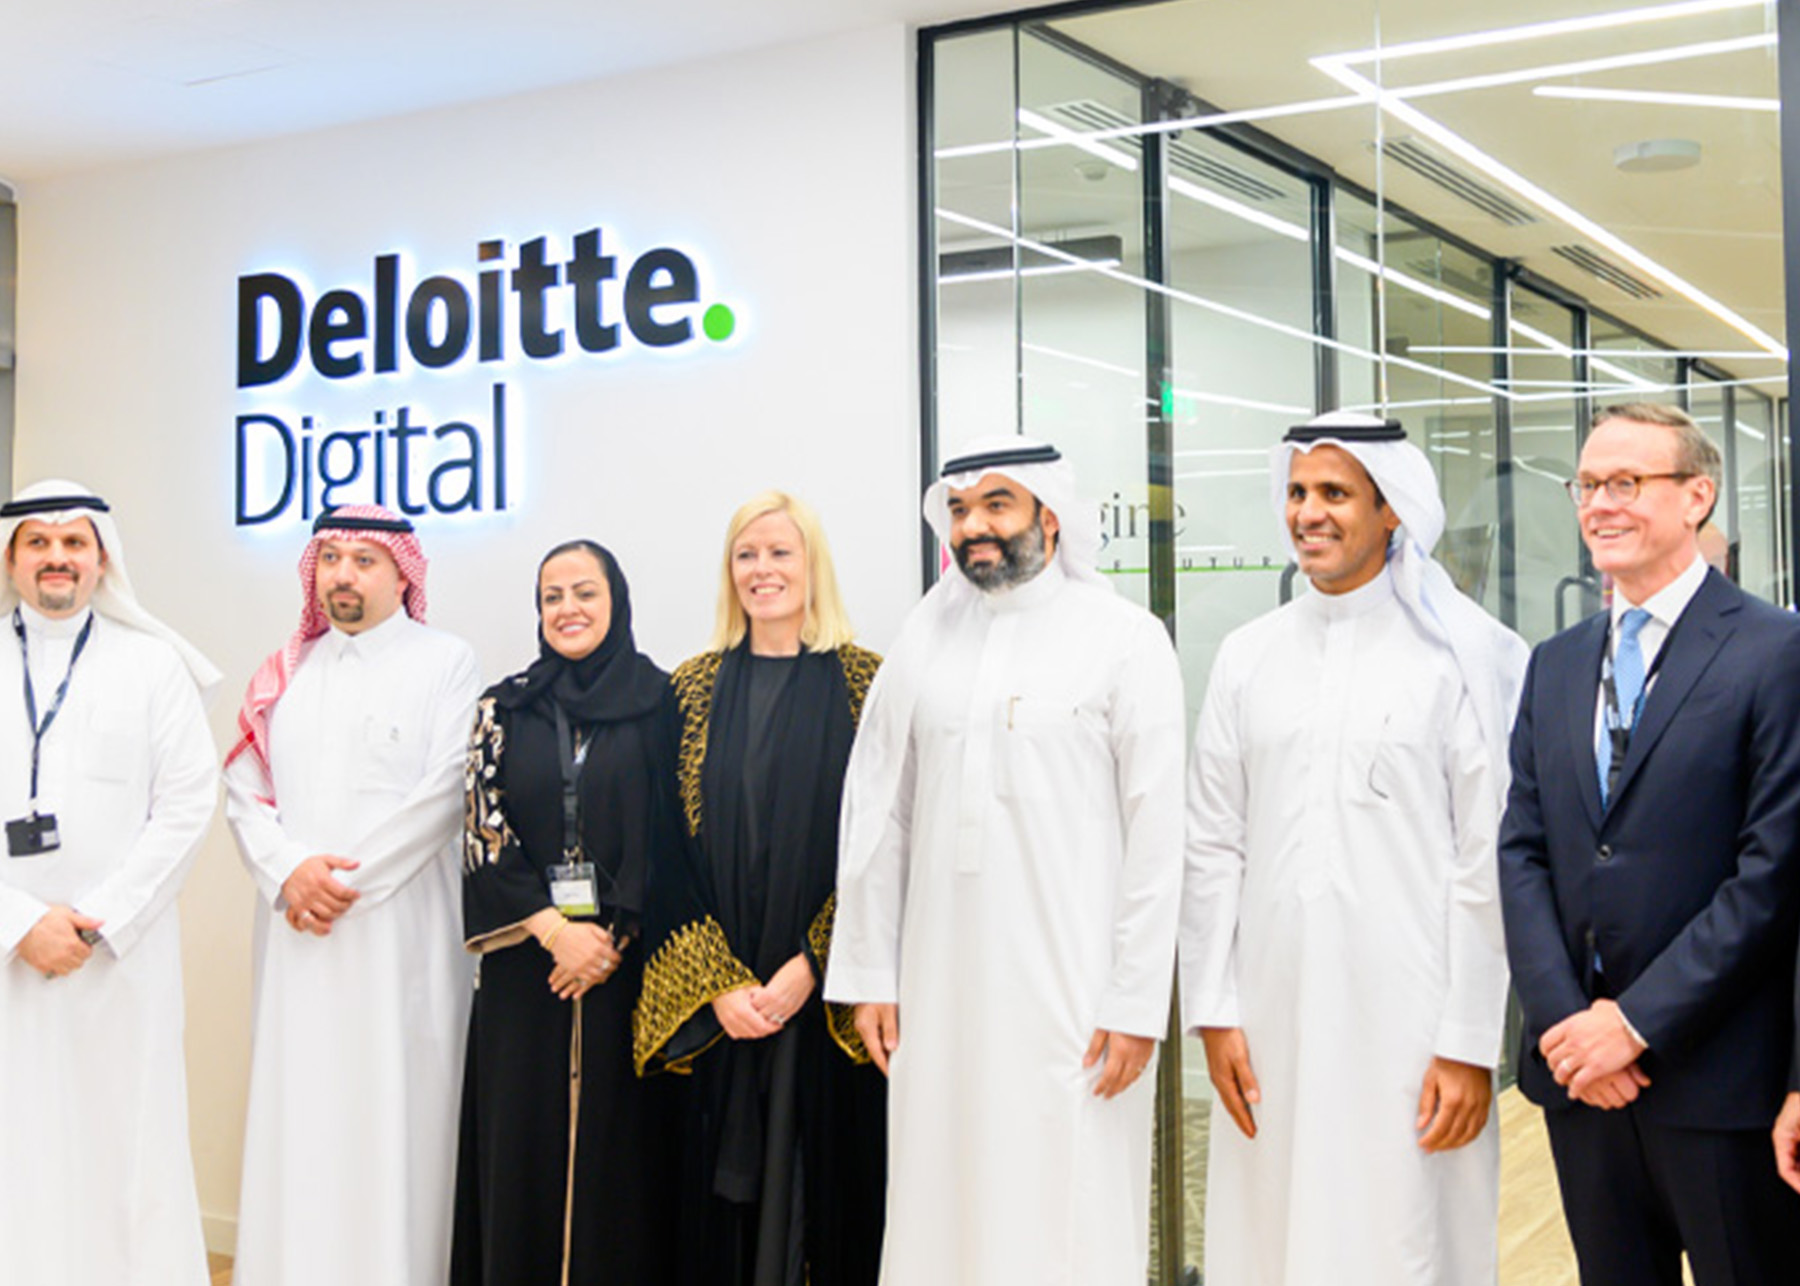 Deloitte employees as a team